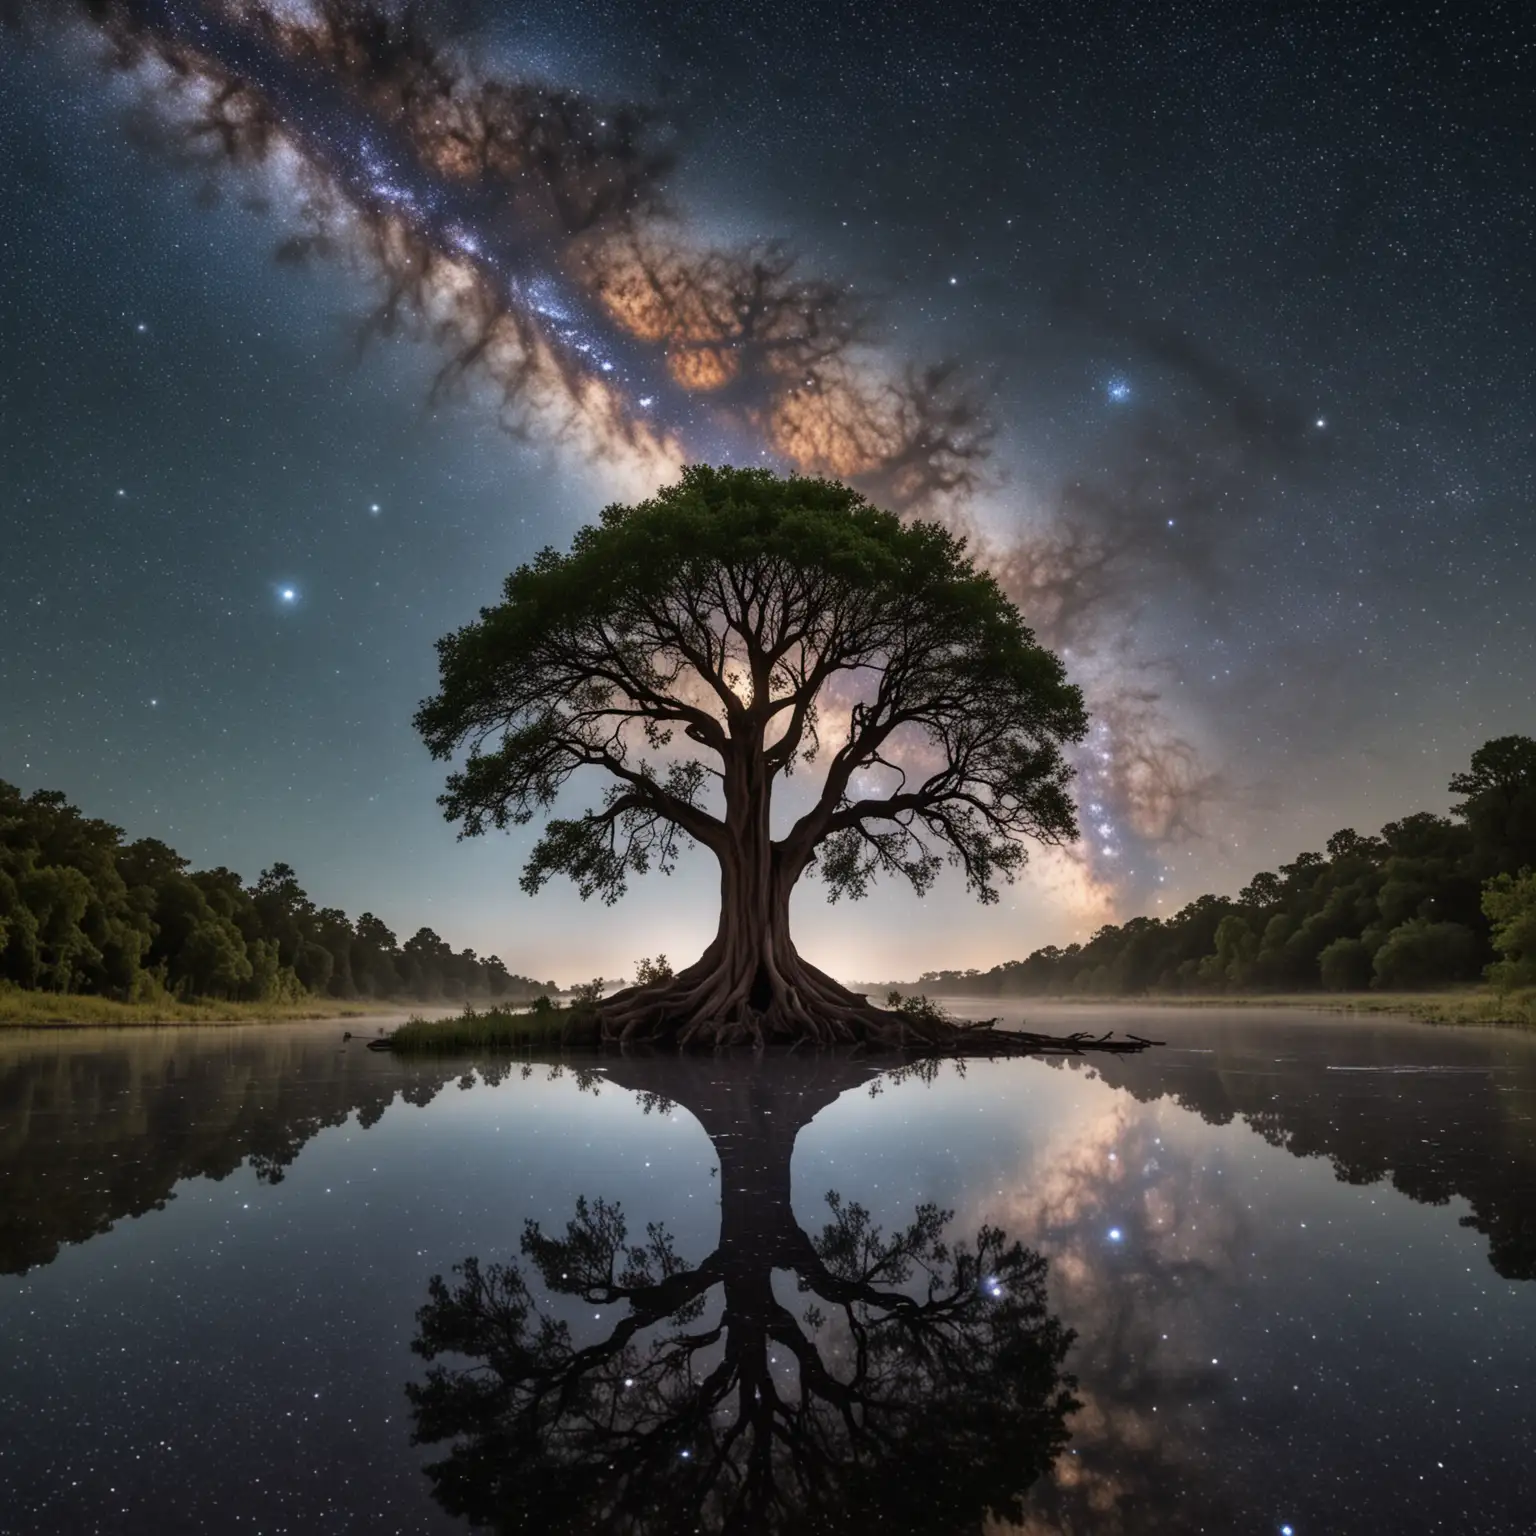 Majestic Tree in a Starlit River Scene